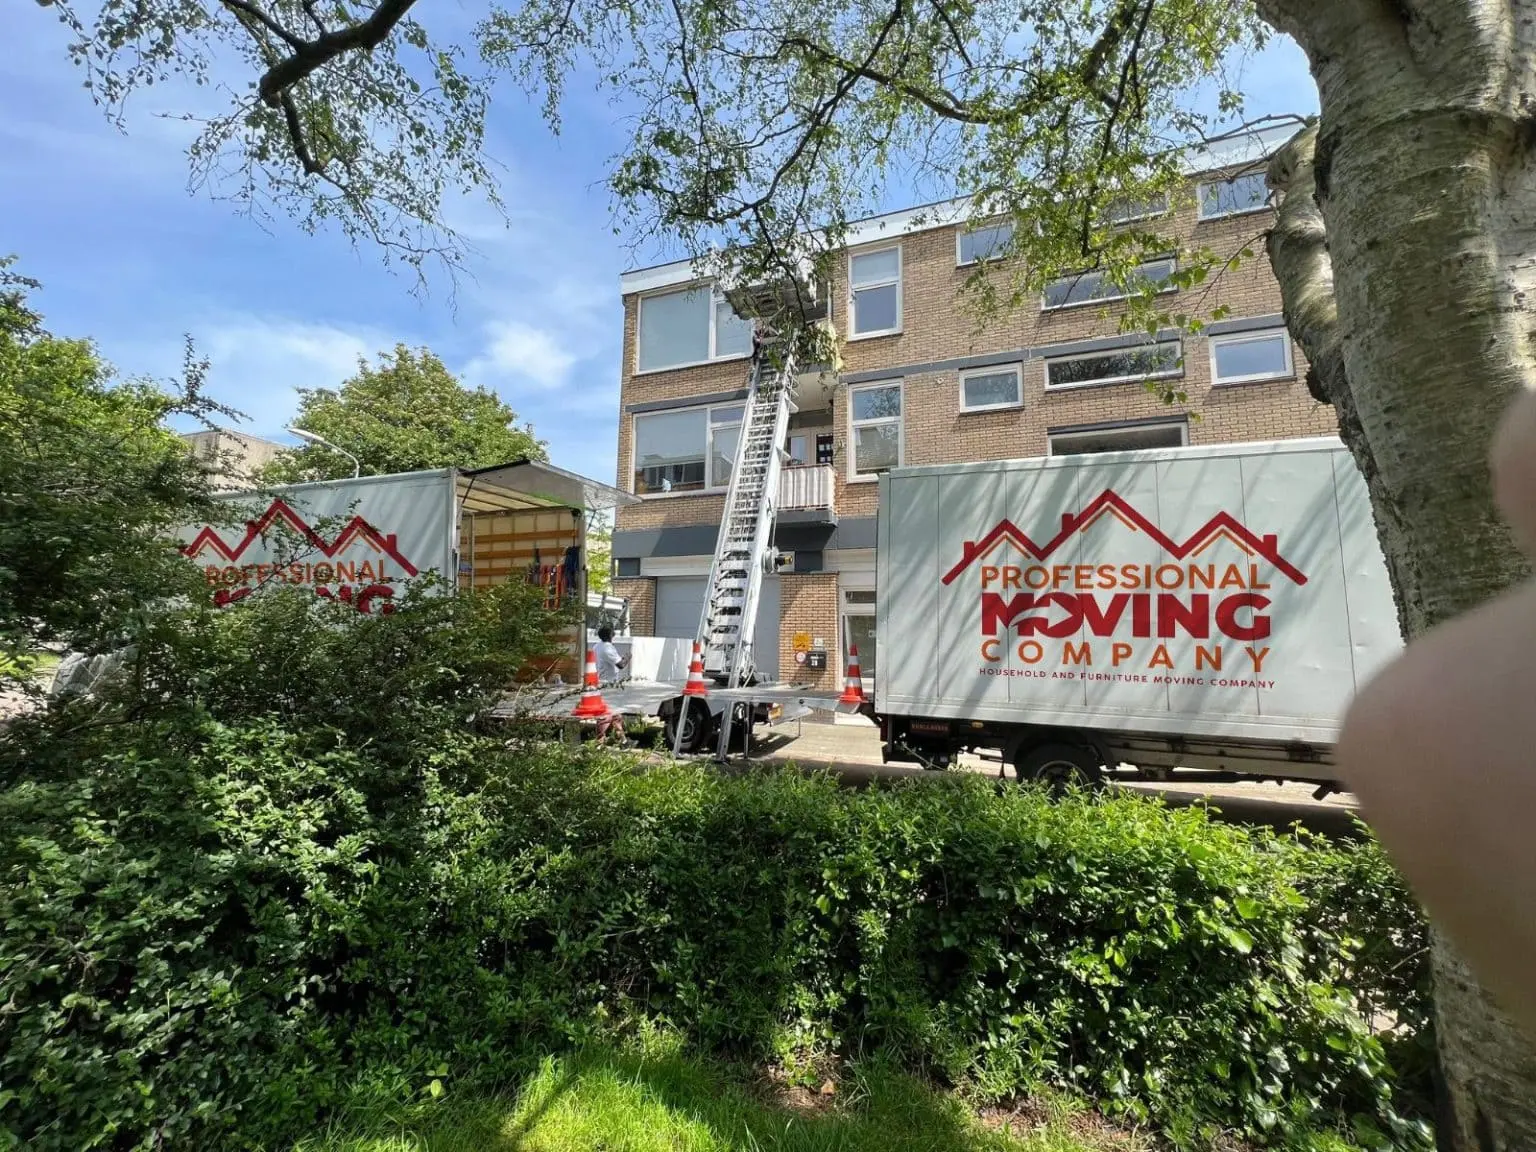 Moving Company Rijswijk | How We Serve Expat Moving